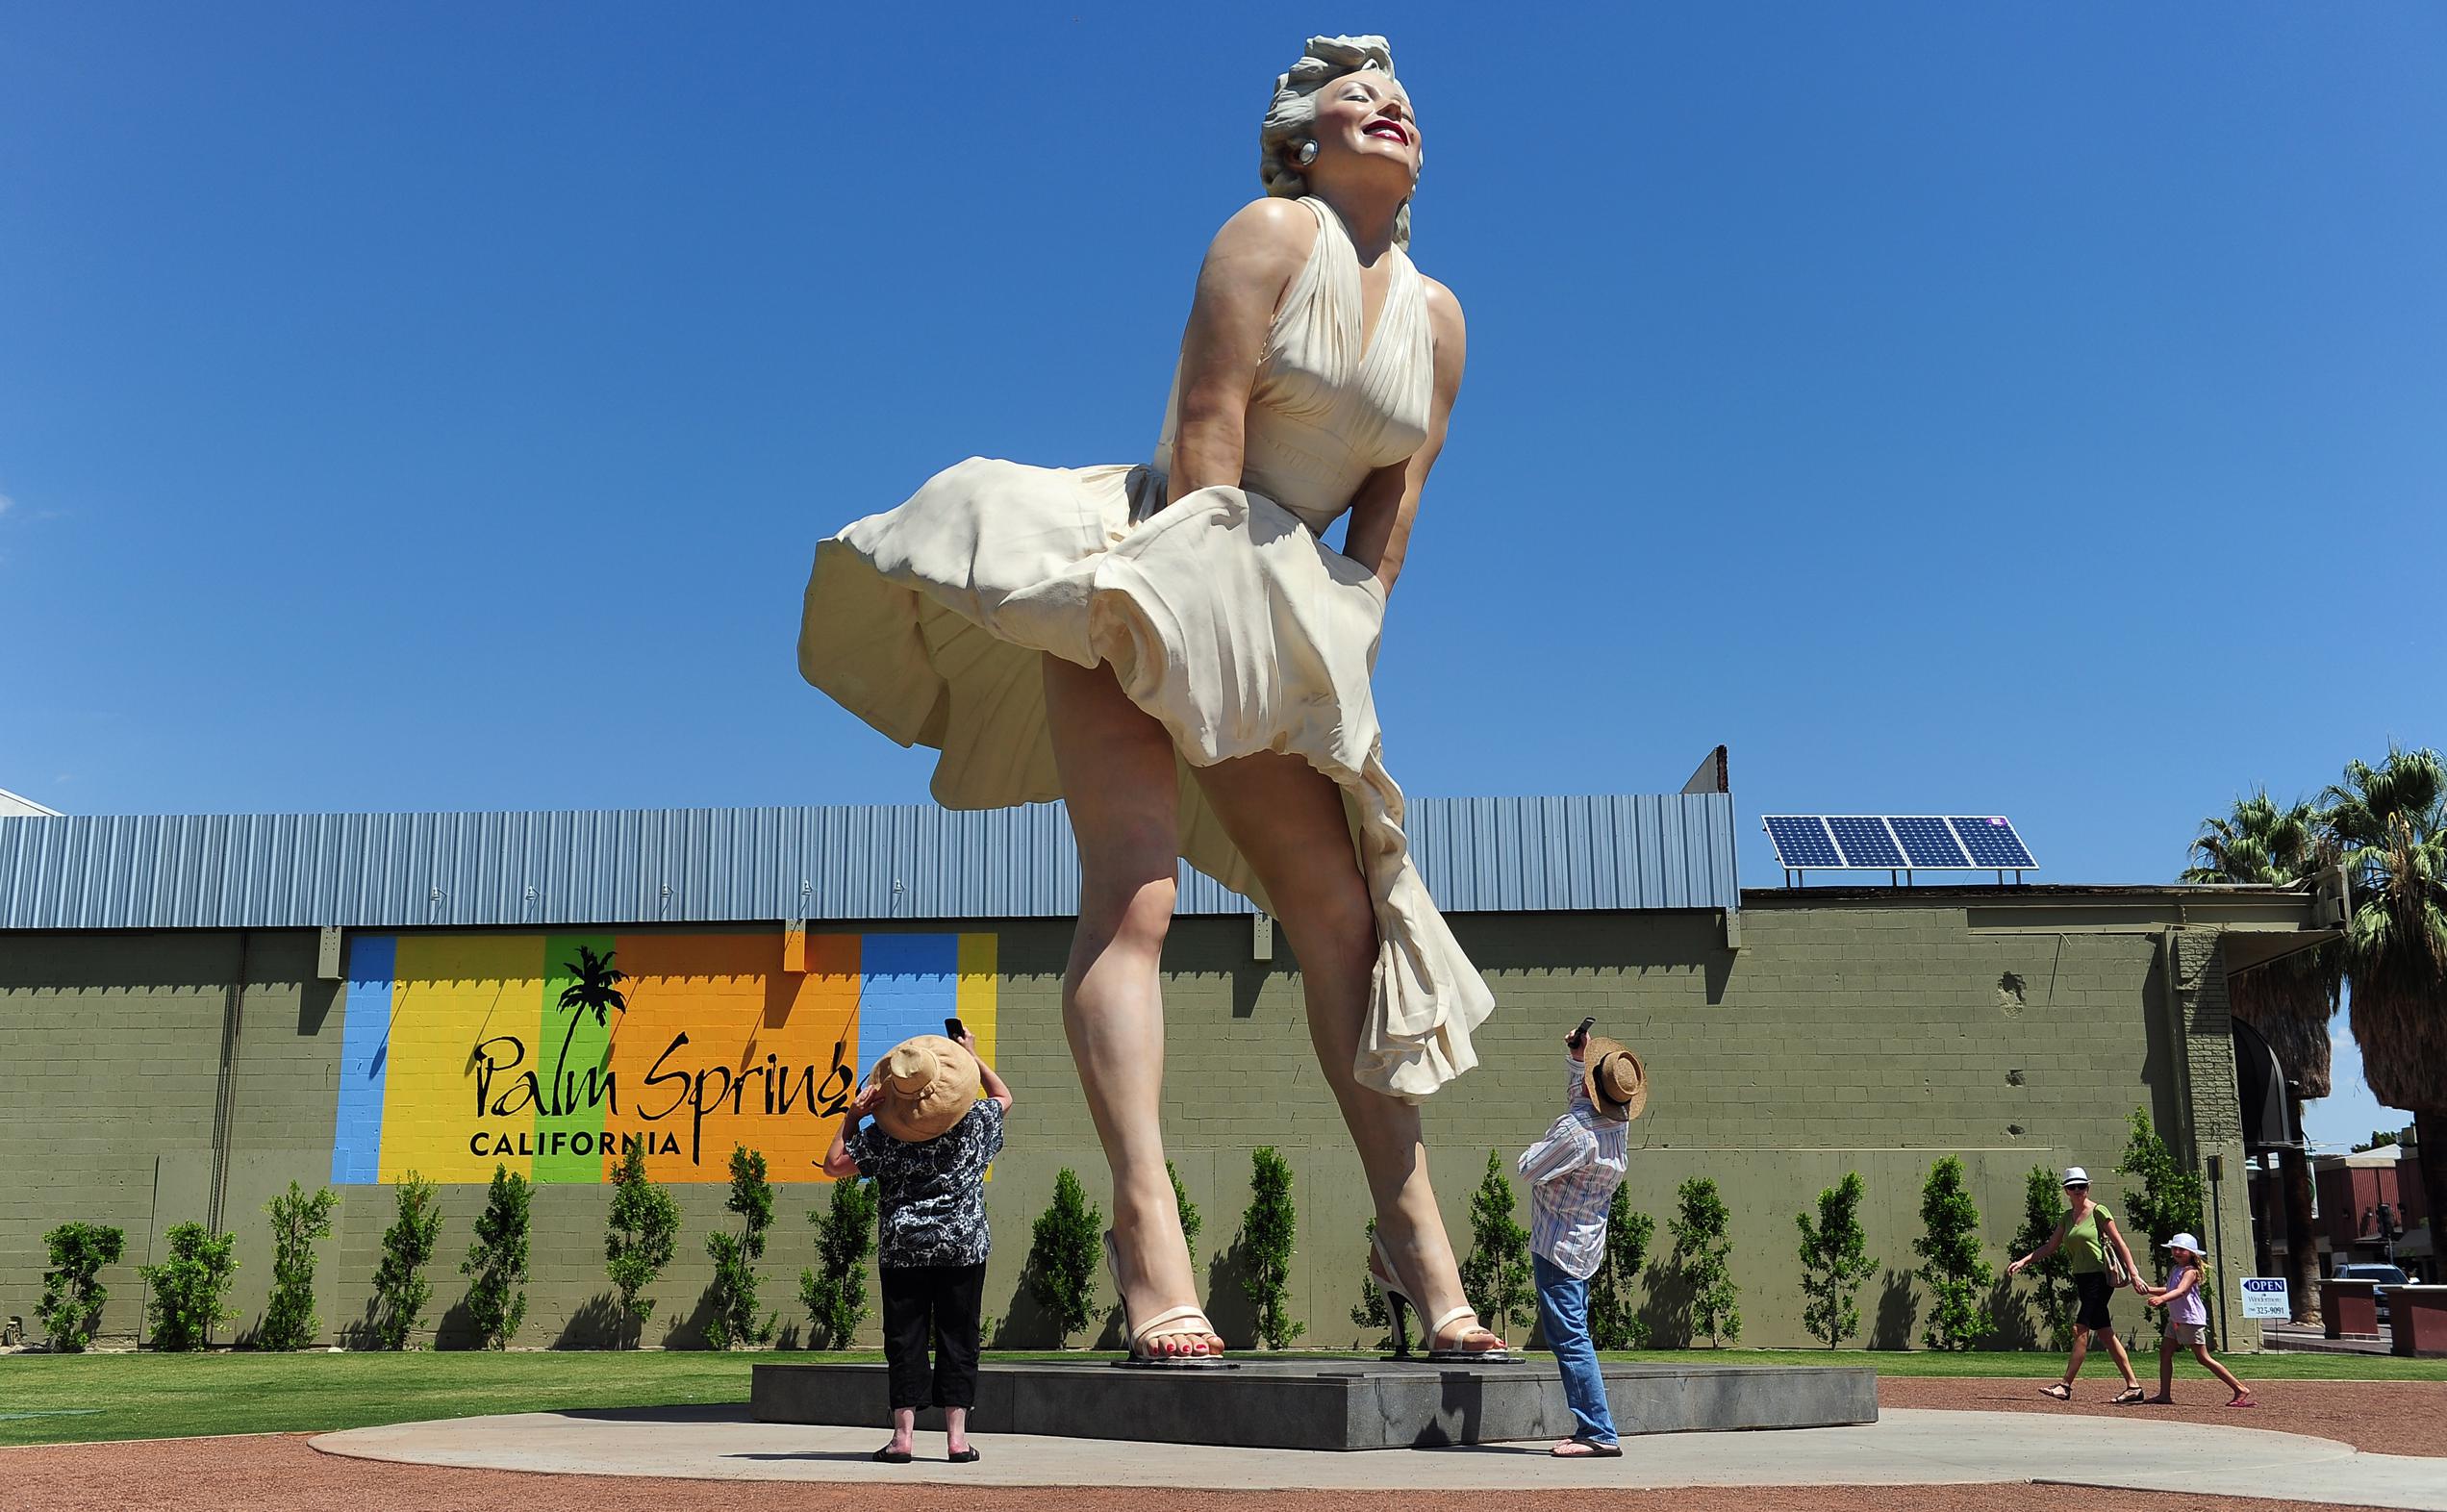 haar piek Groenteboer Heisa om pikant standbeeld van Marilyn Monroe: “Respectloos” | Het  Nieuwsblad Mobile